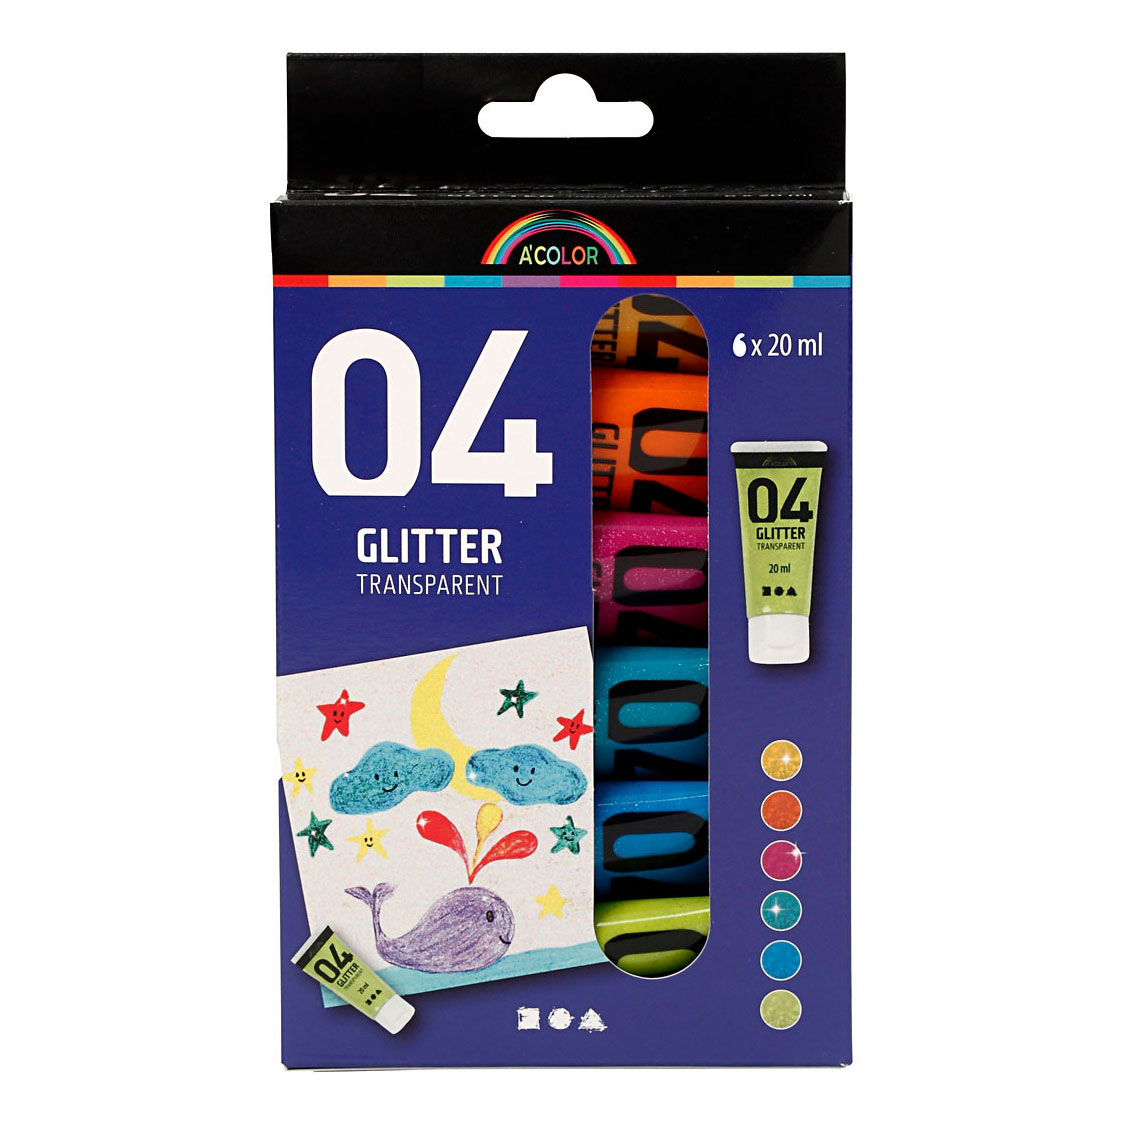 Kinder Acrylverf Glitter Kleur, 6x20ml